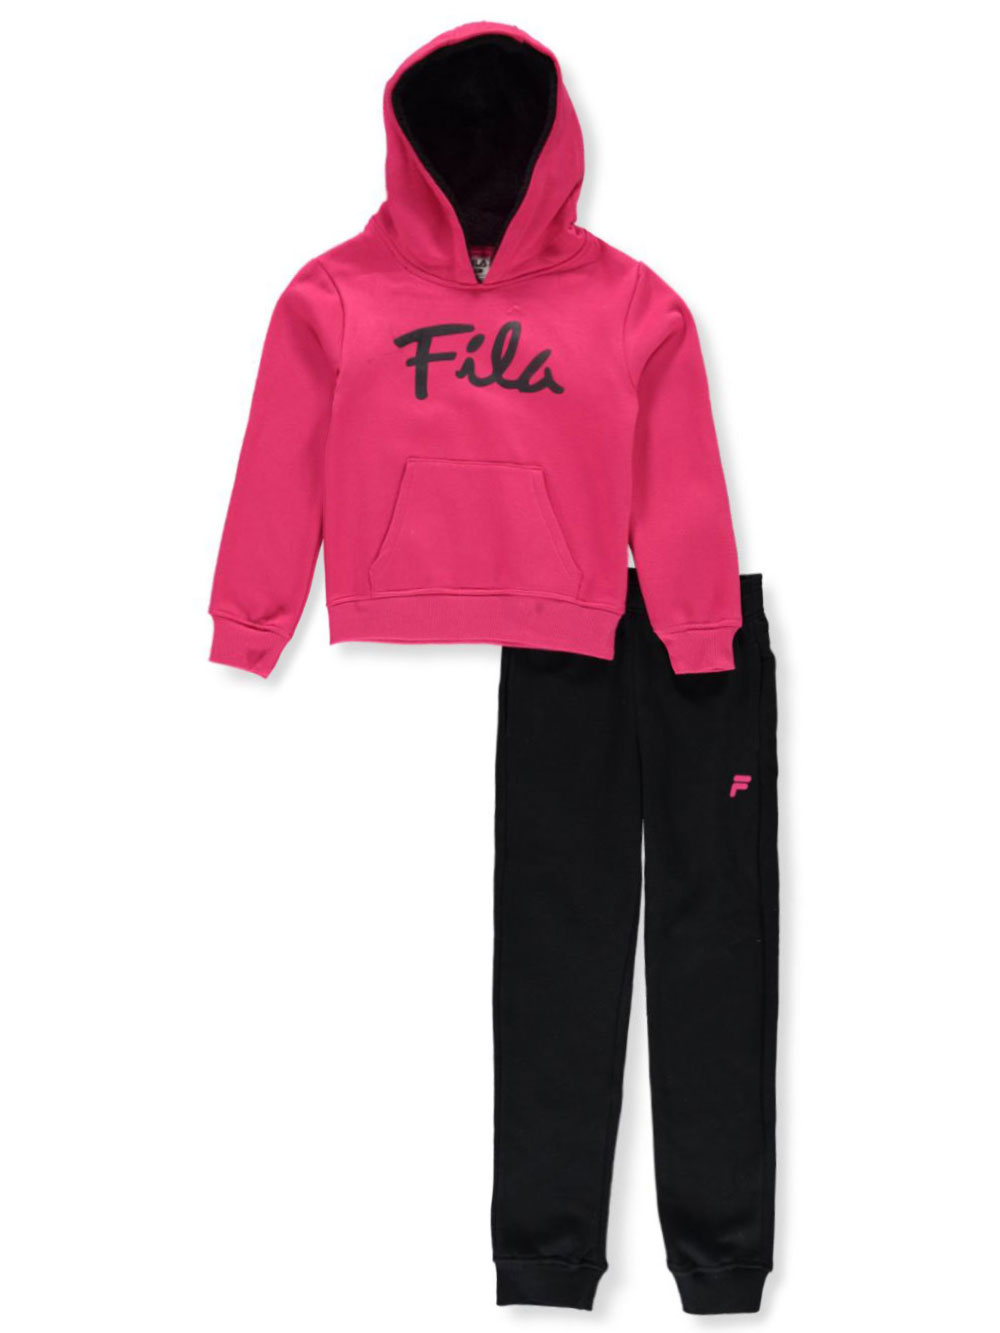 fila hoodie for girls